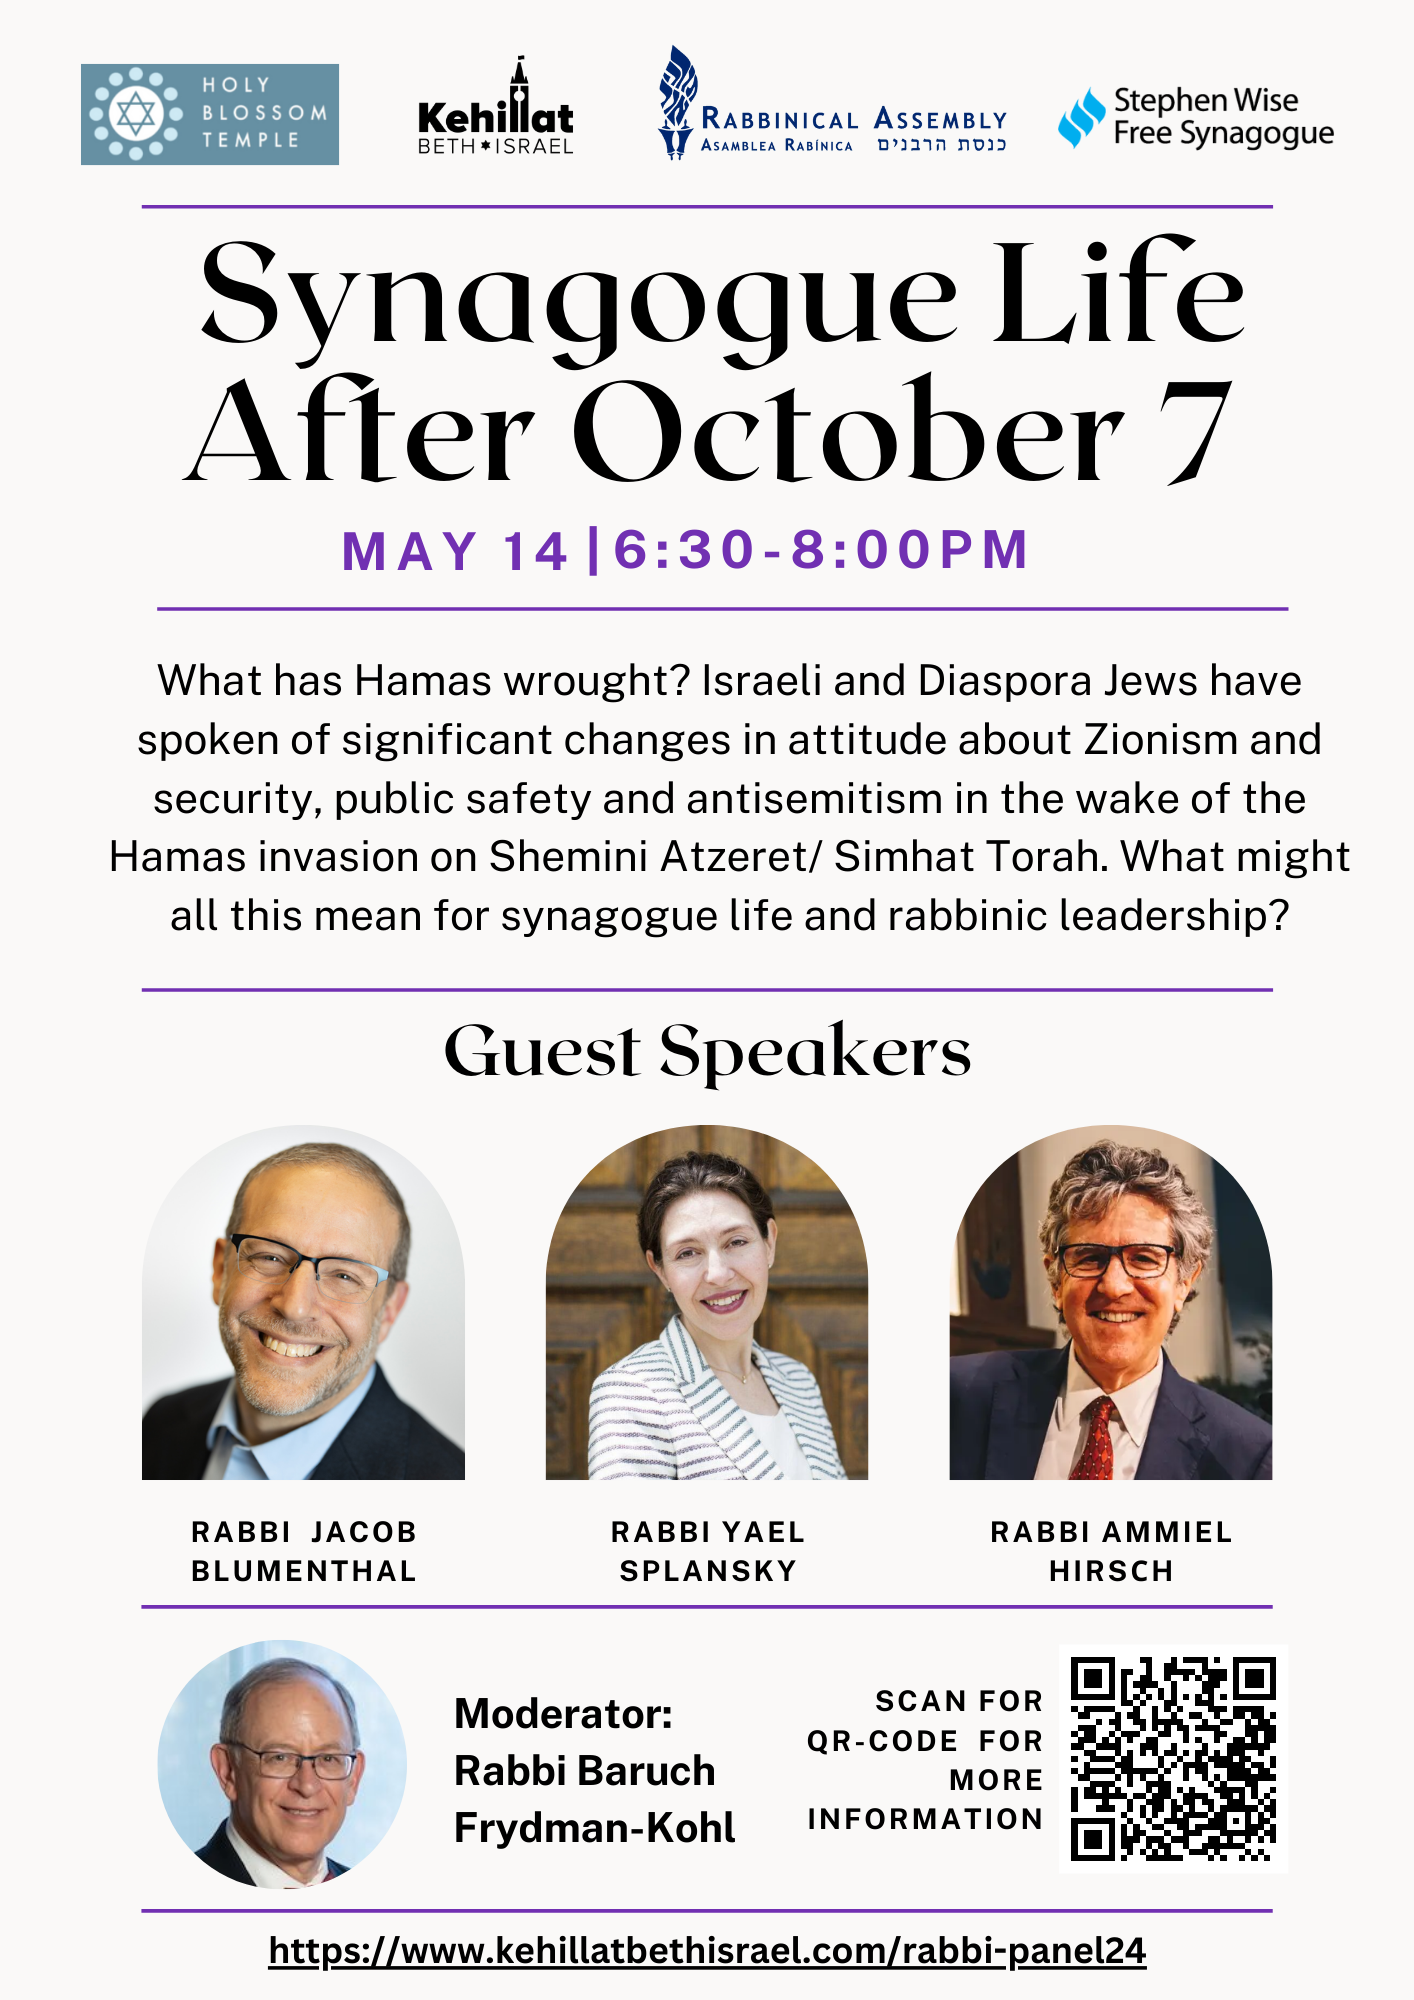 Rabbi's Online Panel